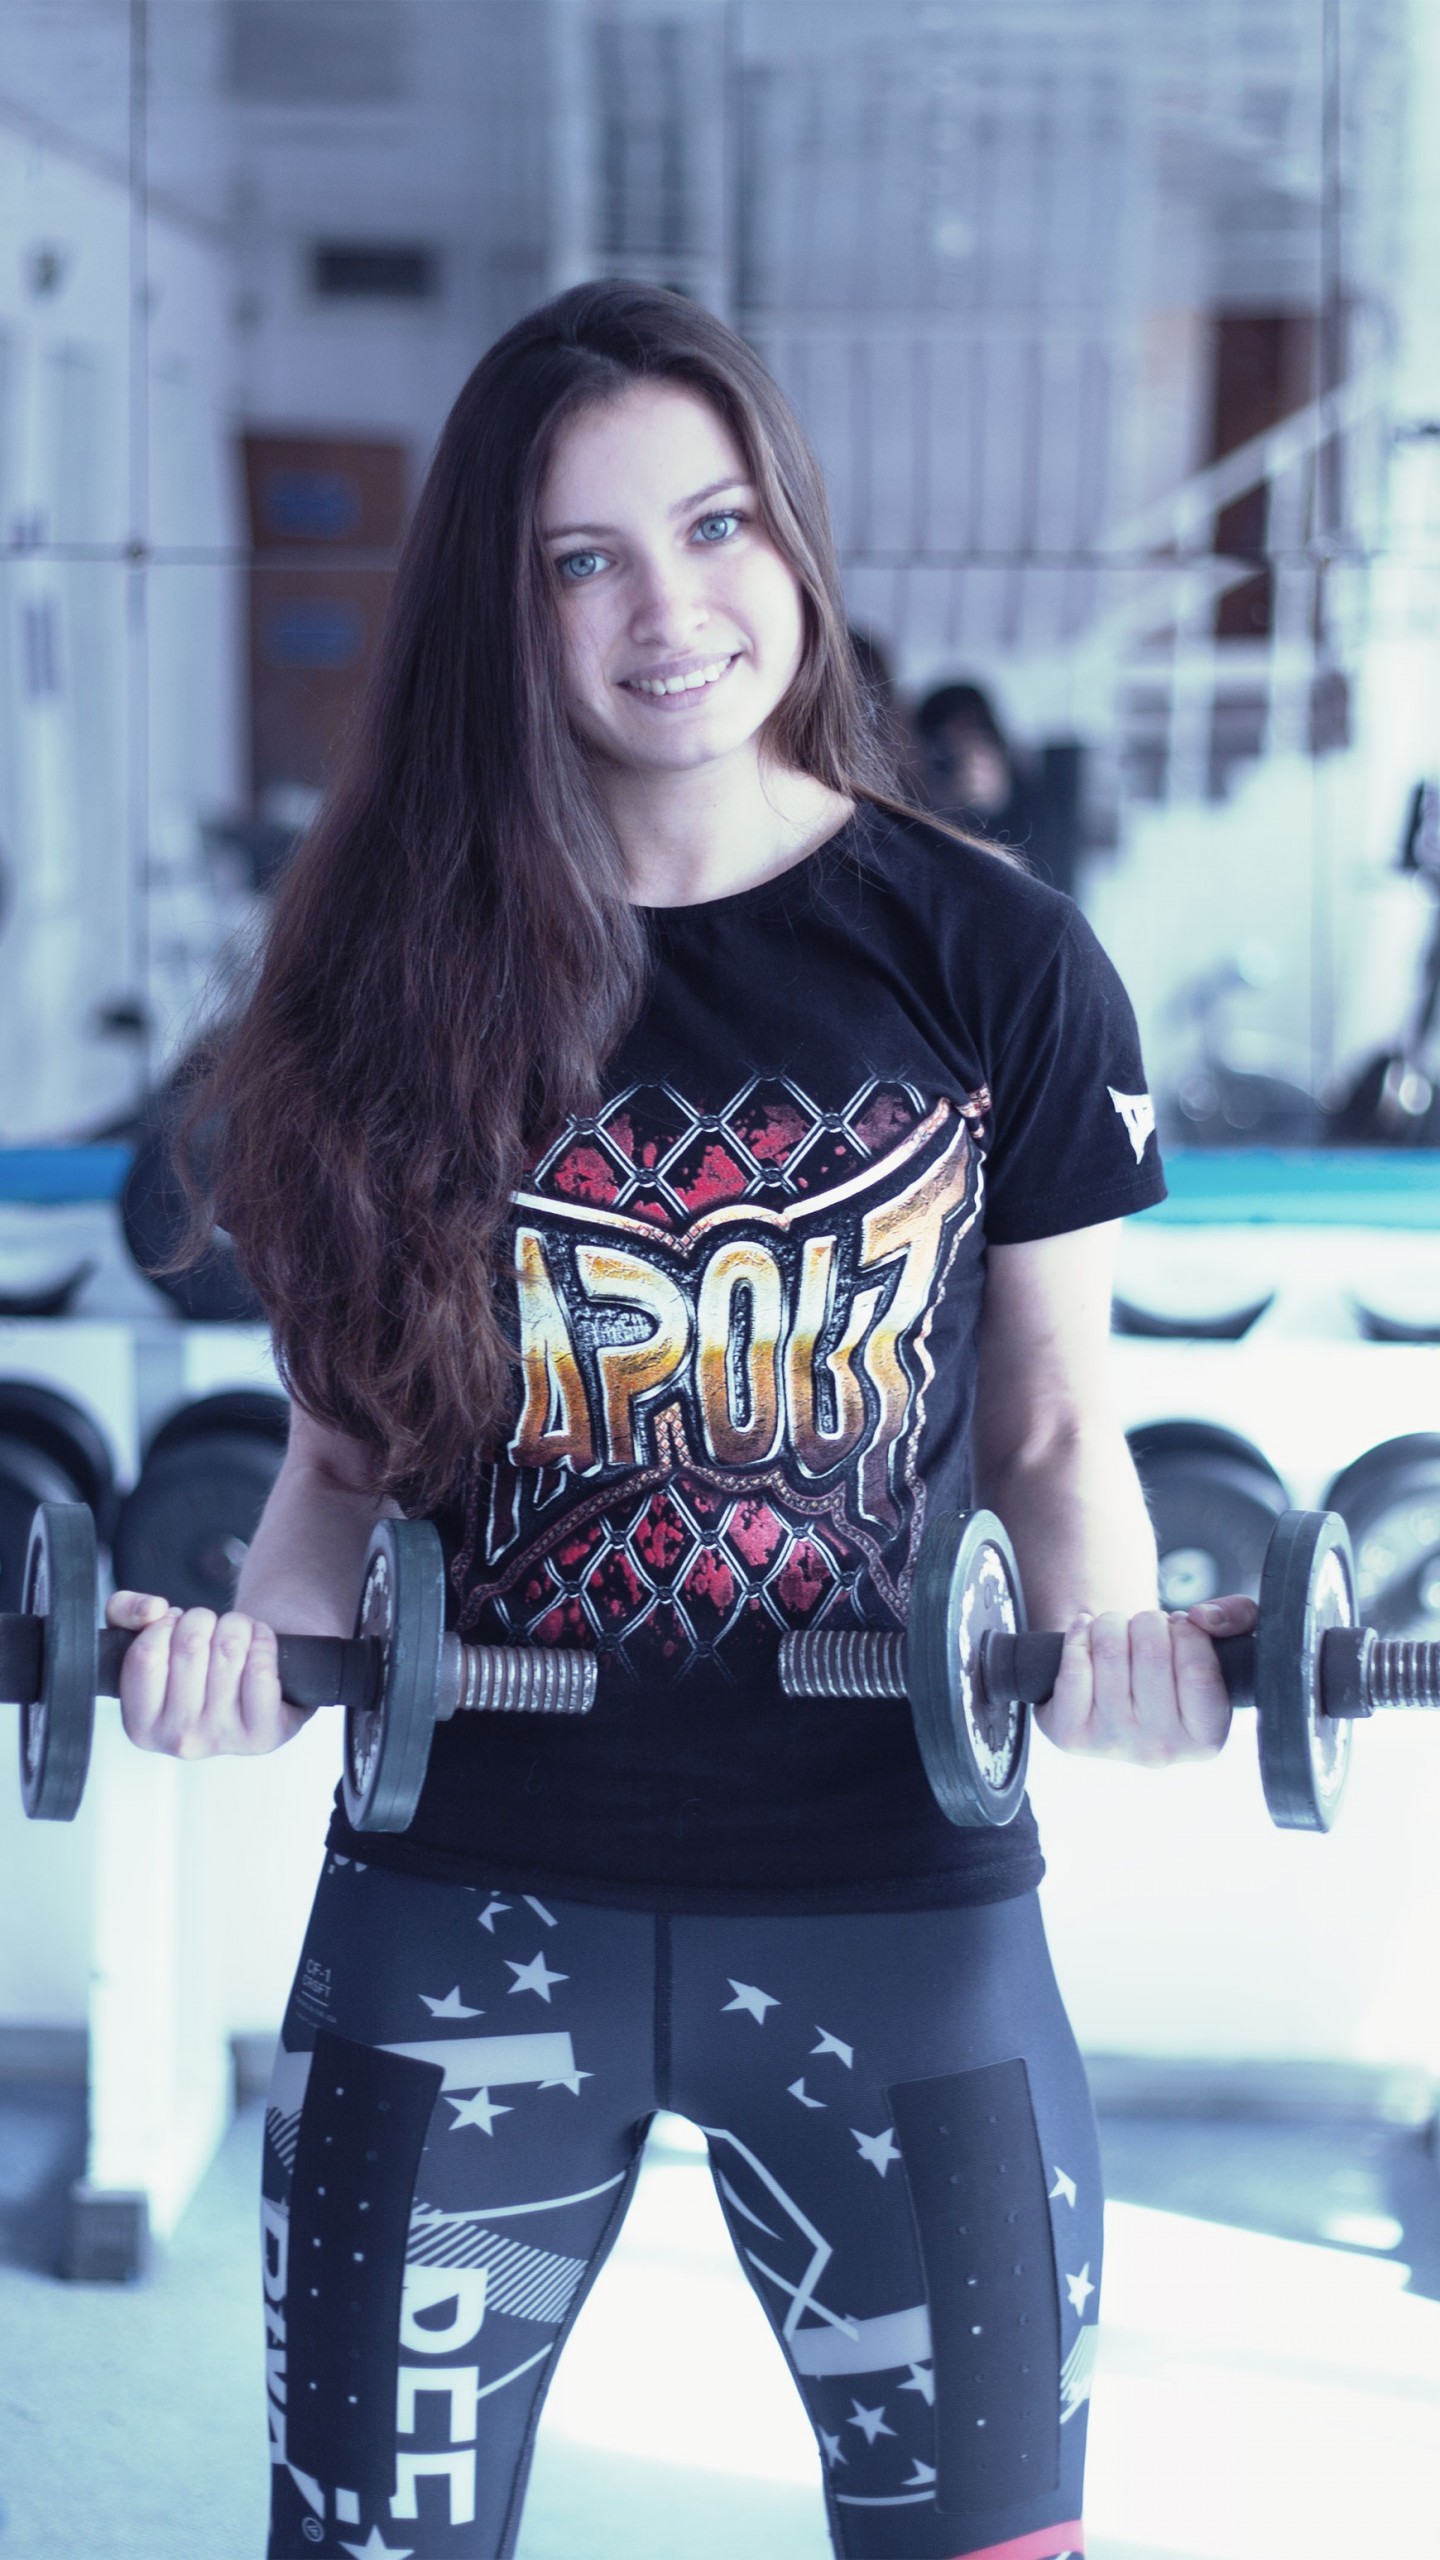 Wallpaper Girl Fitness Exercise Gym Dumbbells Workout